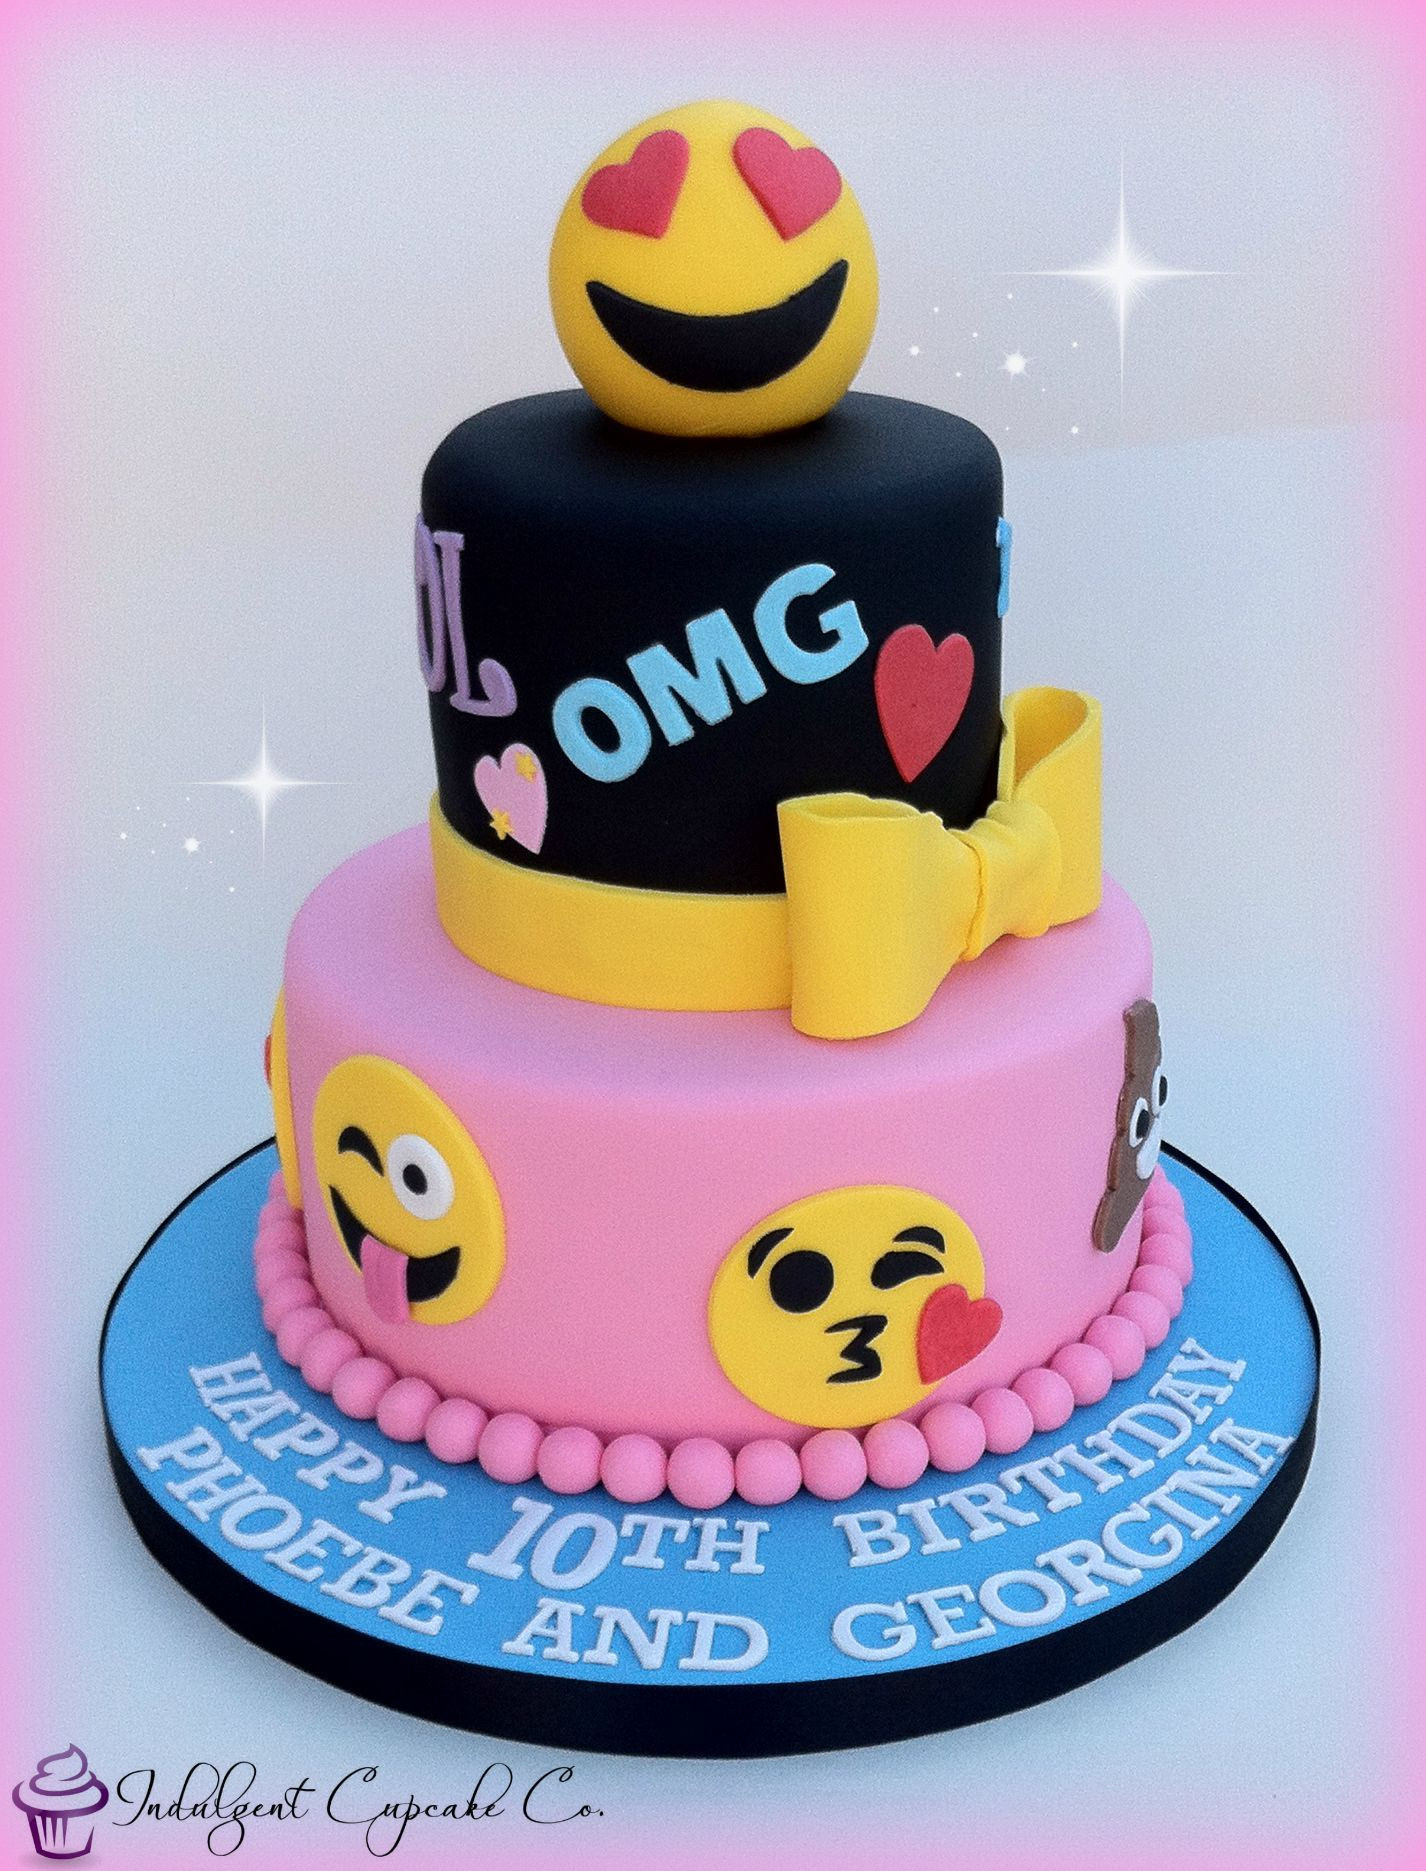 Best ideas about Birthday Cake Emoji
. Save or Pin Best 25 Emoji cake ideas on Pinterest Now.